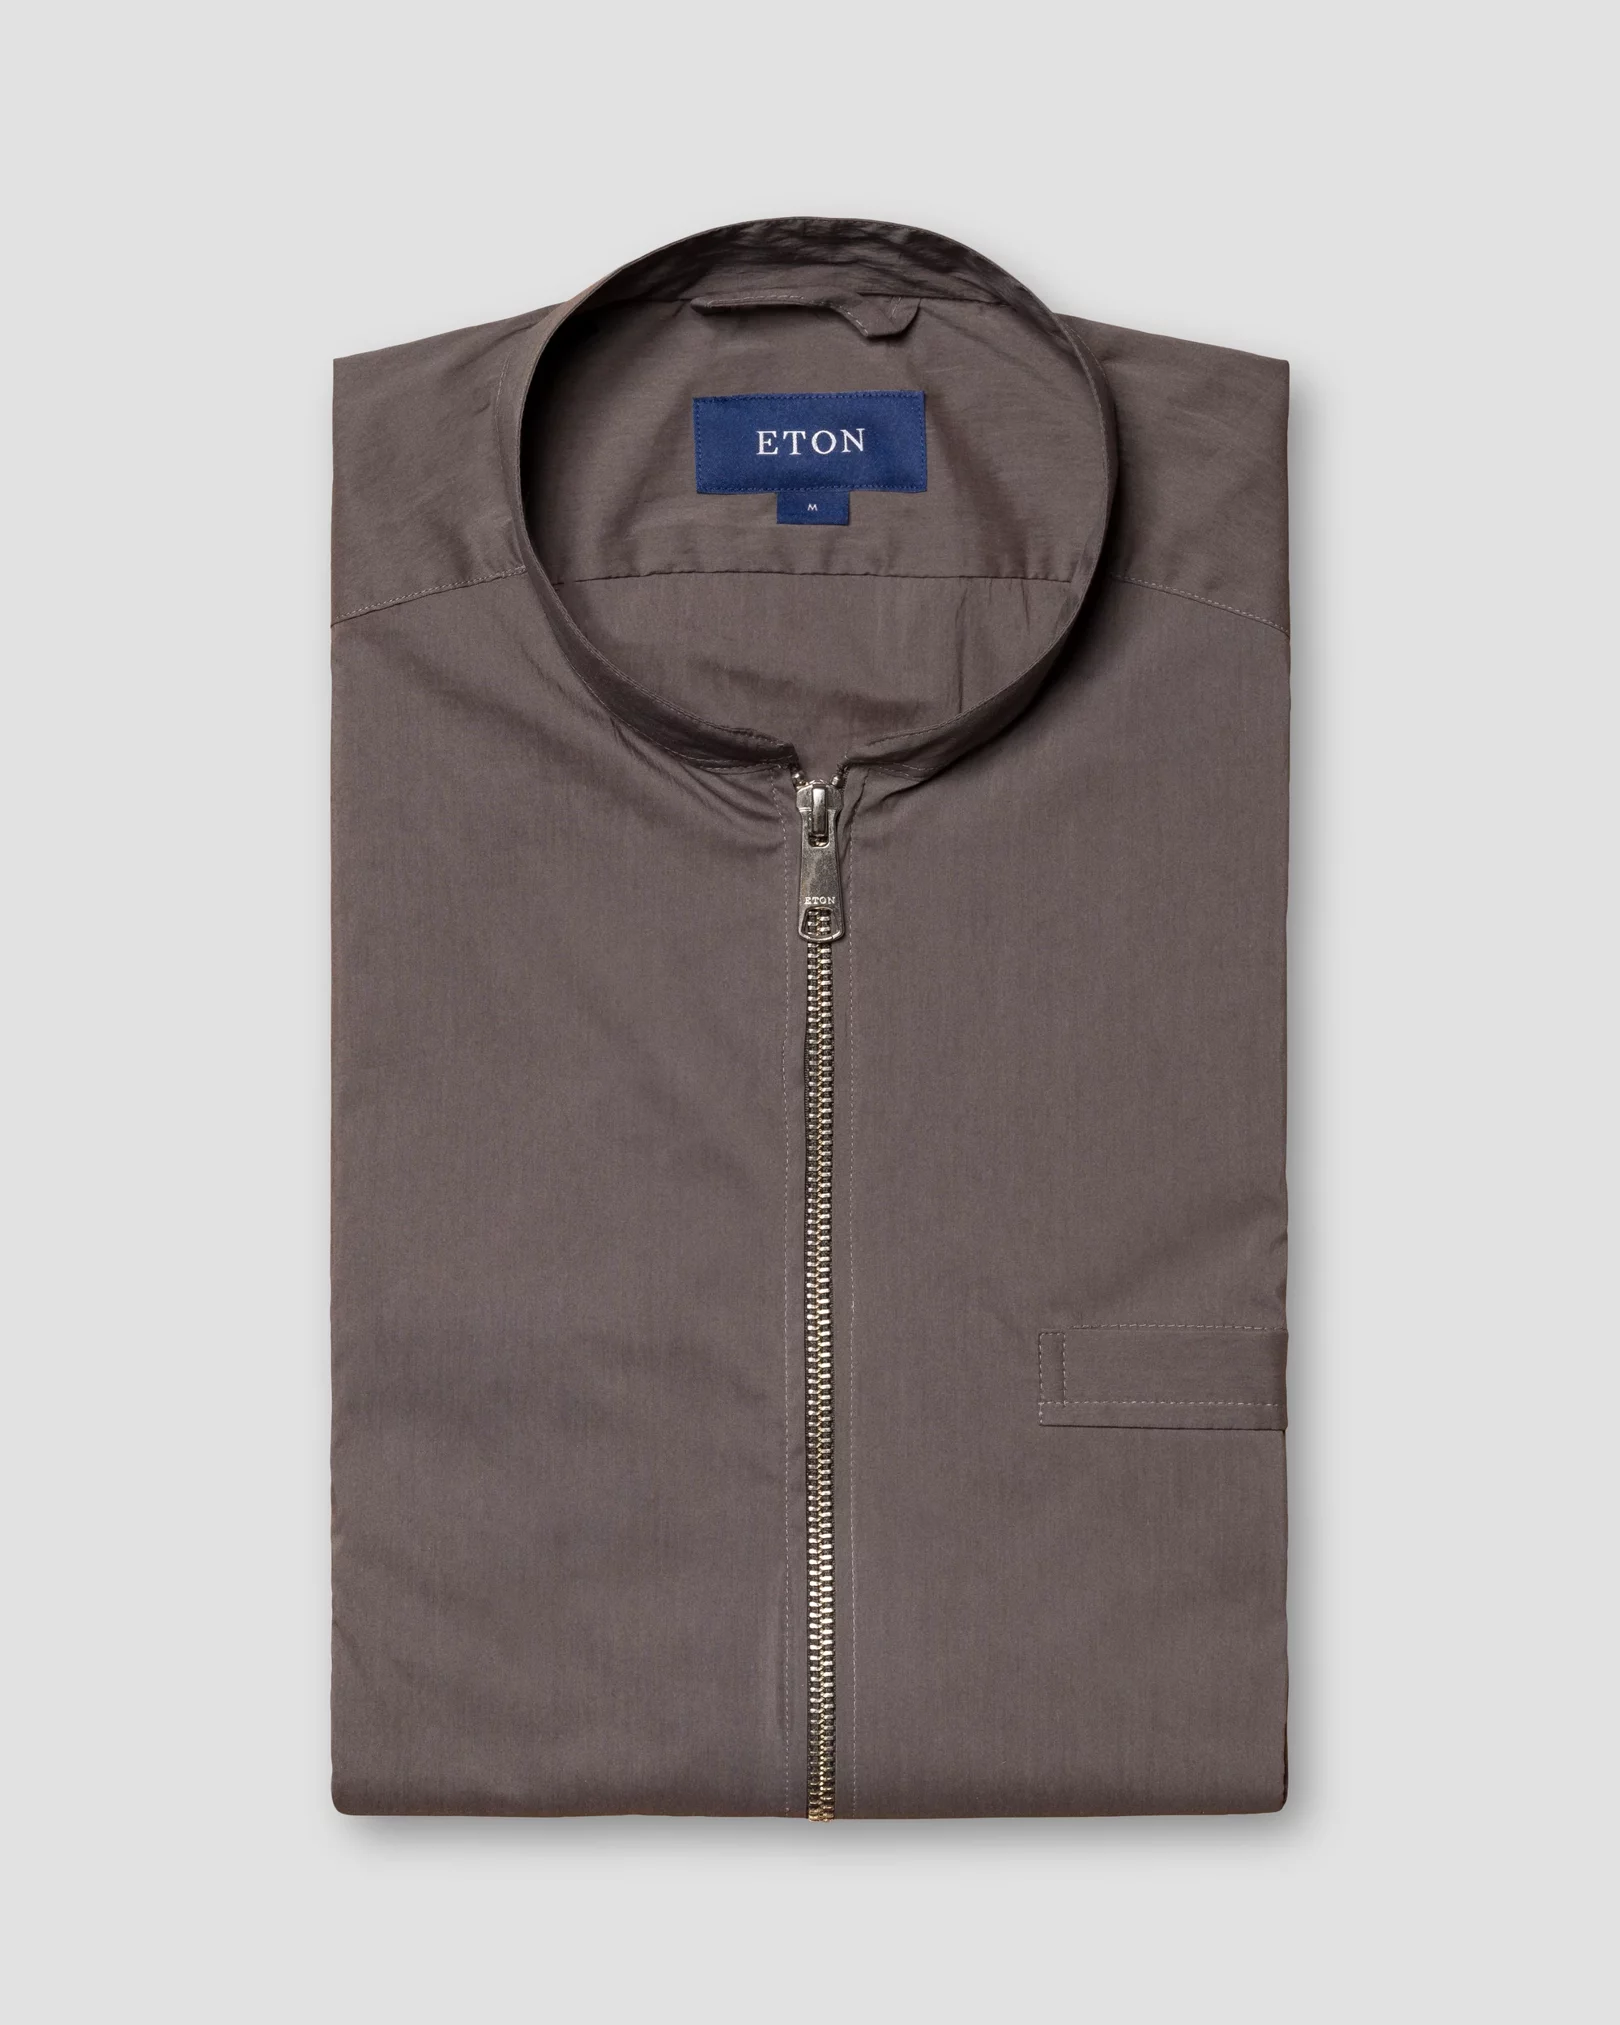 Eton - brown wind vest stand collar low sleeve less vest